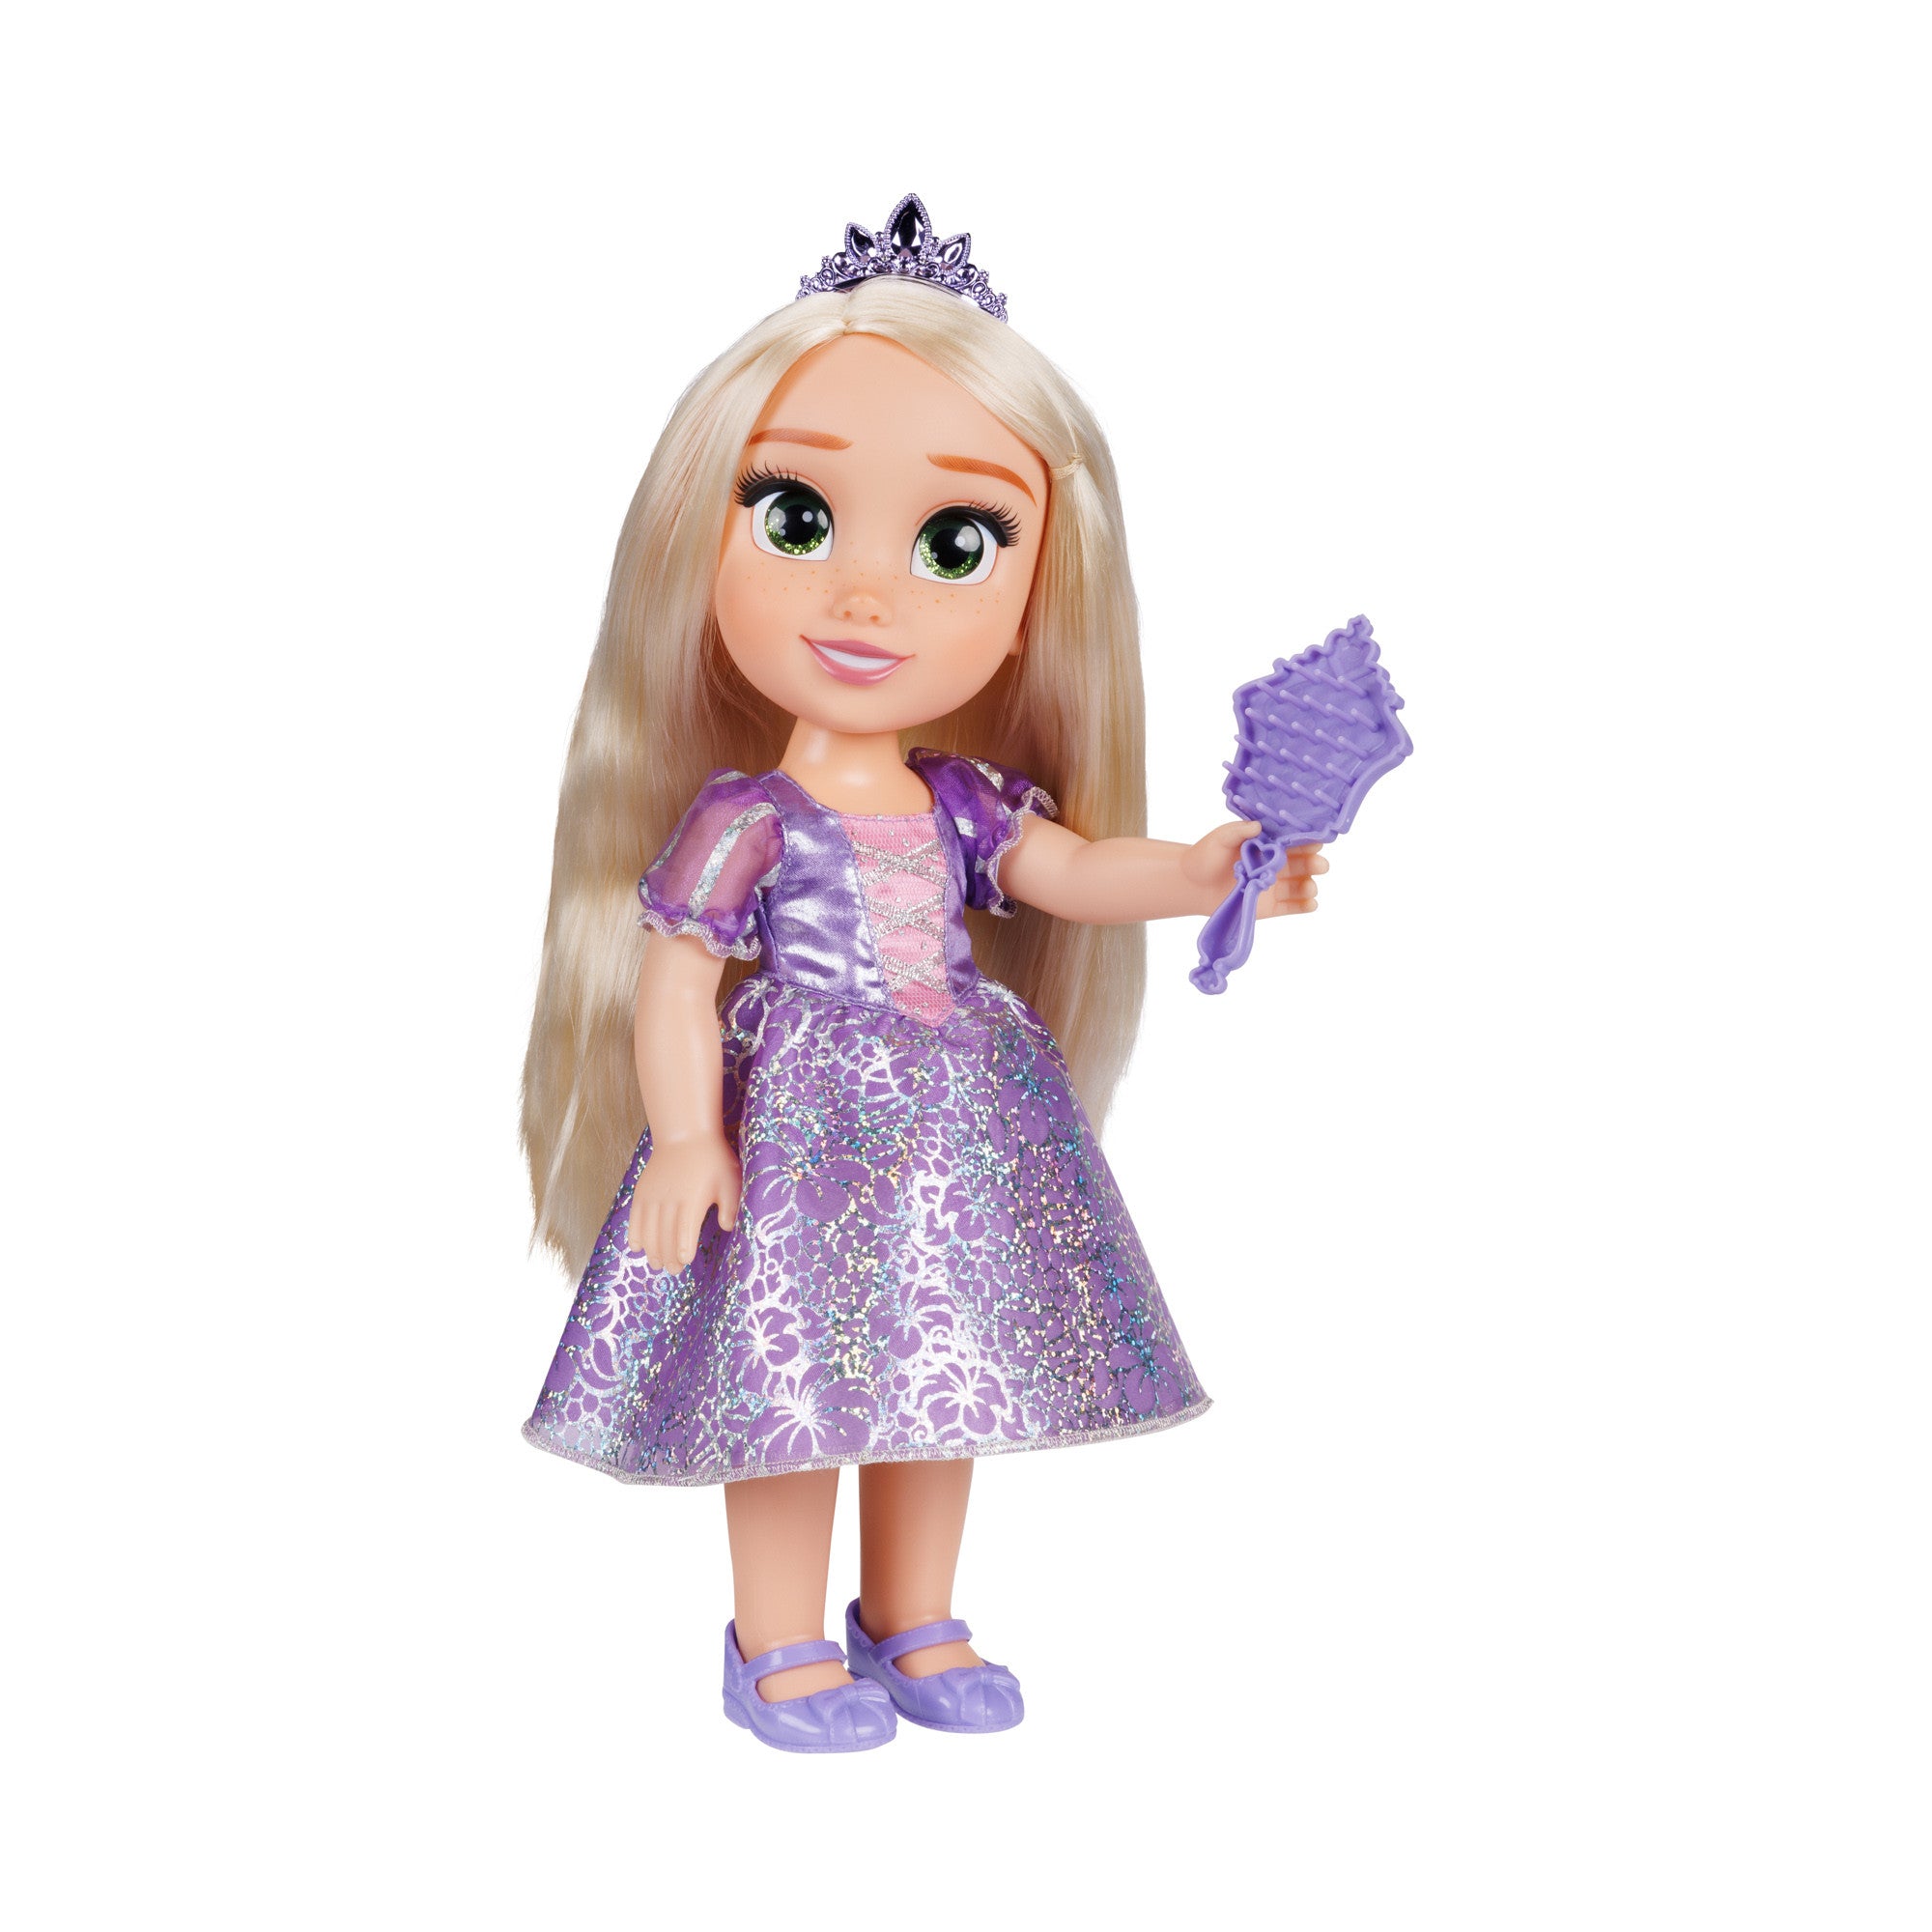 Disney Princess My Friend Rapunzel  Doll